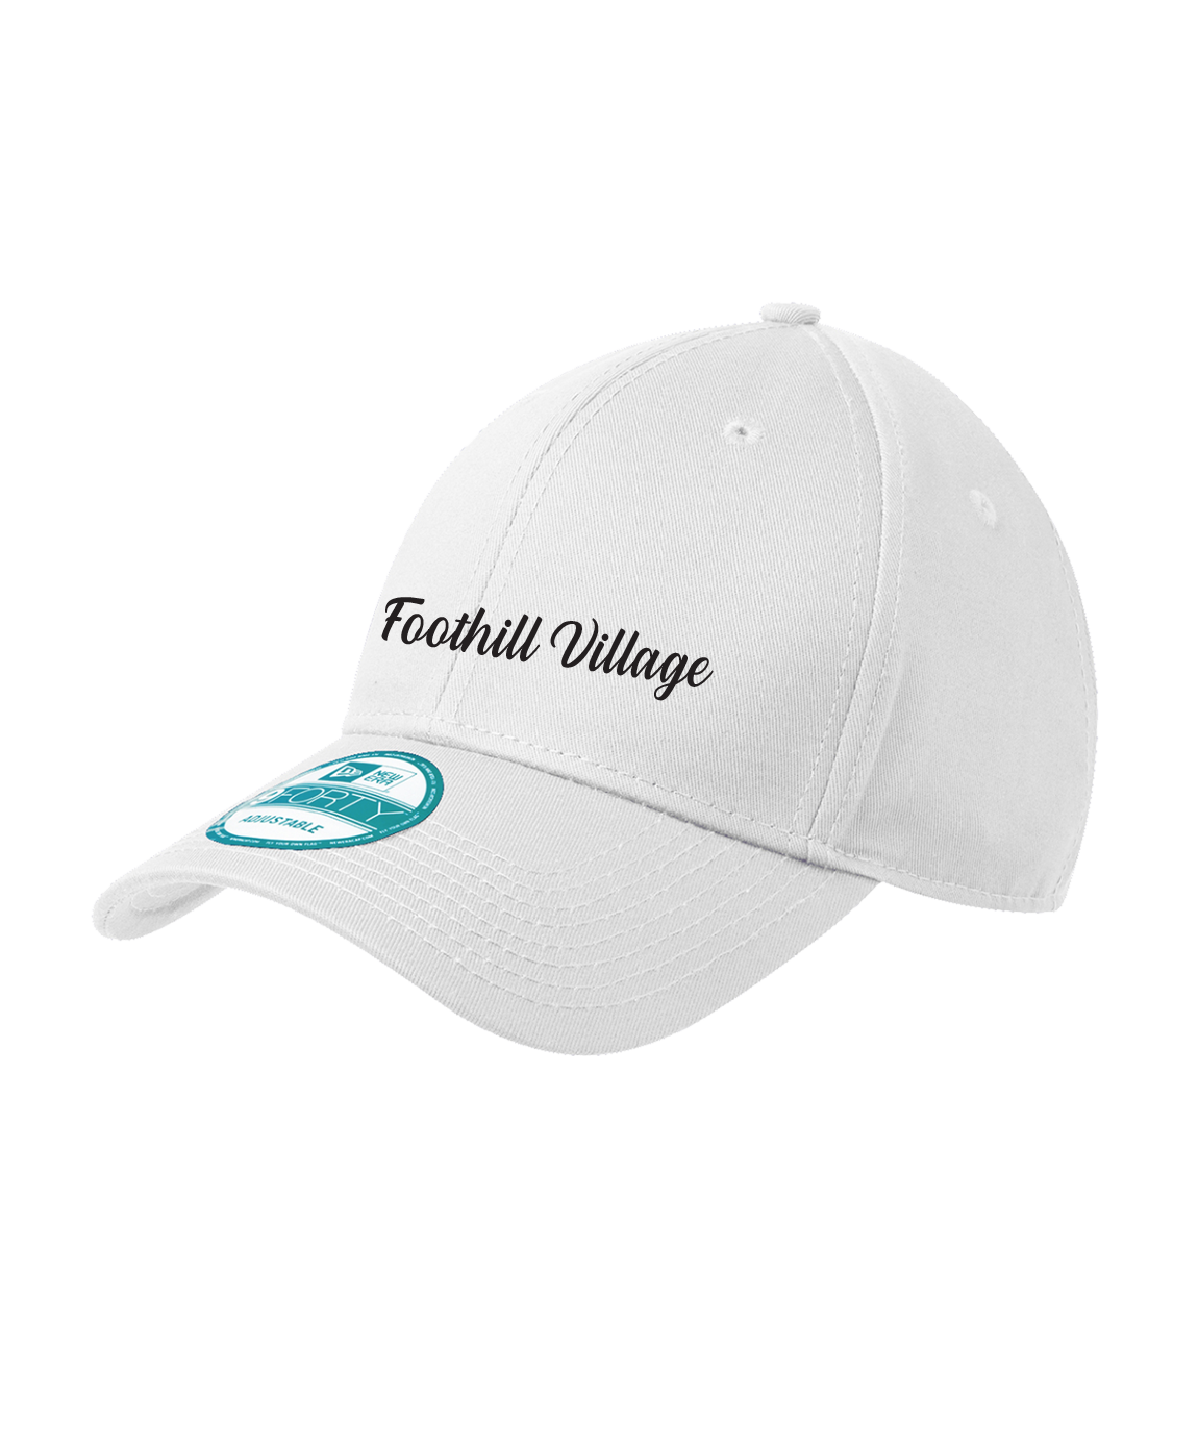 Foothill Village - New Era® - Adjustable Structured Cap